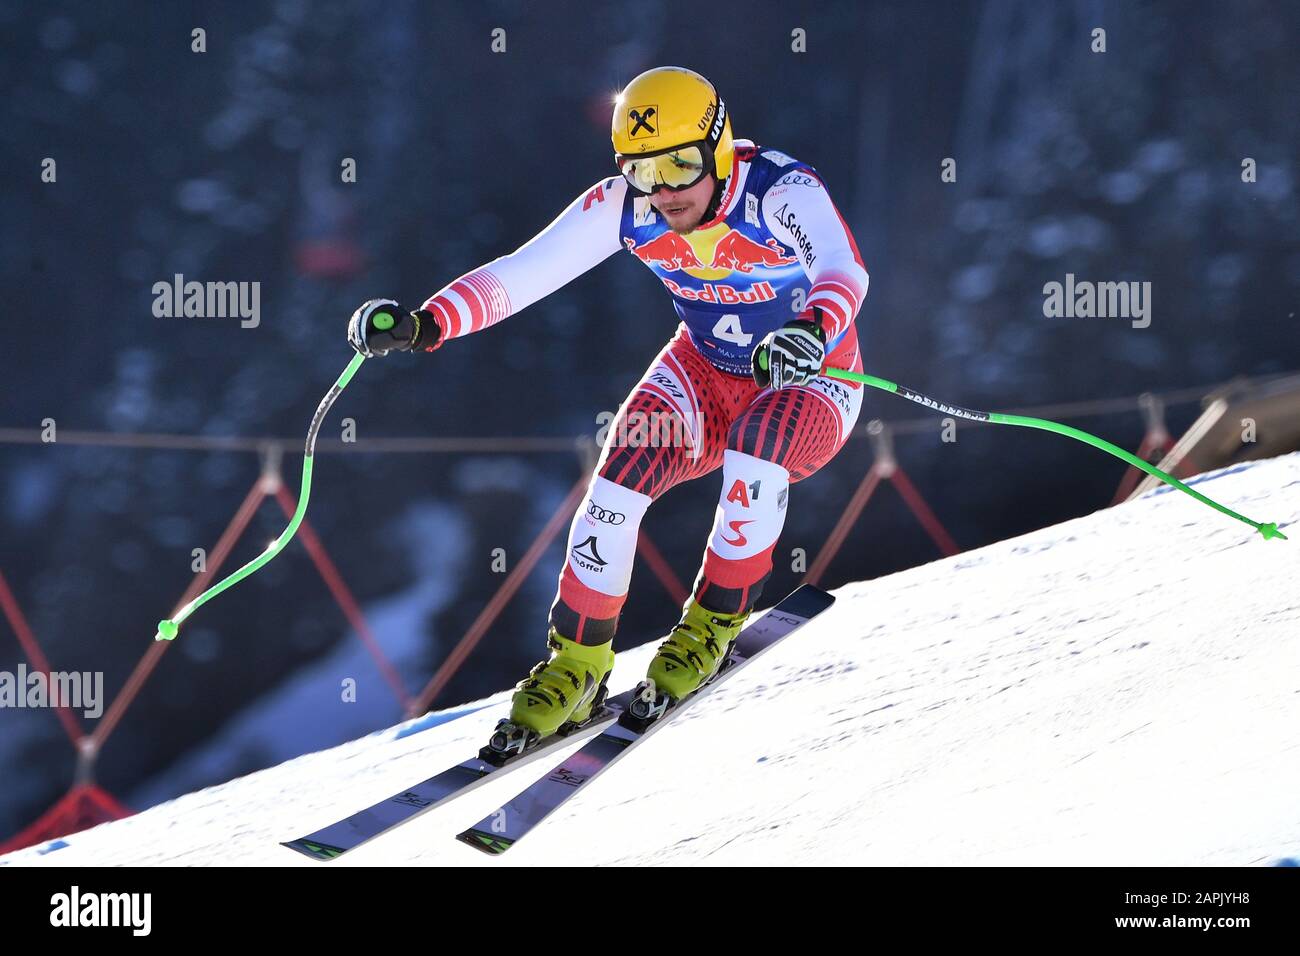 Max FRANZ (AUT), action, alpine skiing, training, 80. Hahnenkamm race 2020, Kitzbuehel, Hahnenkamm, Streif, departure, January 23, 2020 | usage worldwide Stock Photo